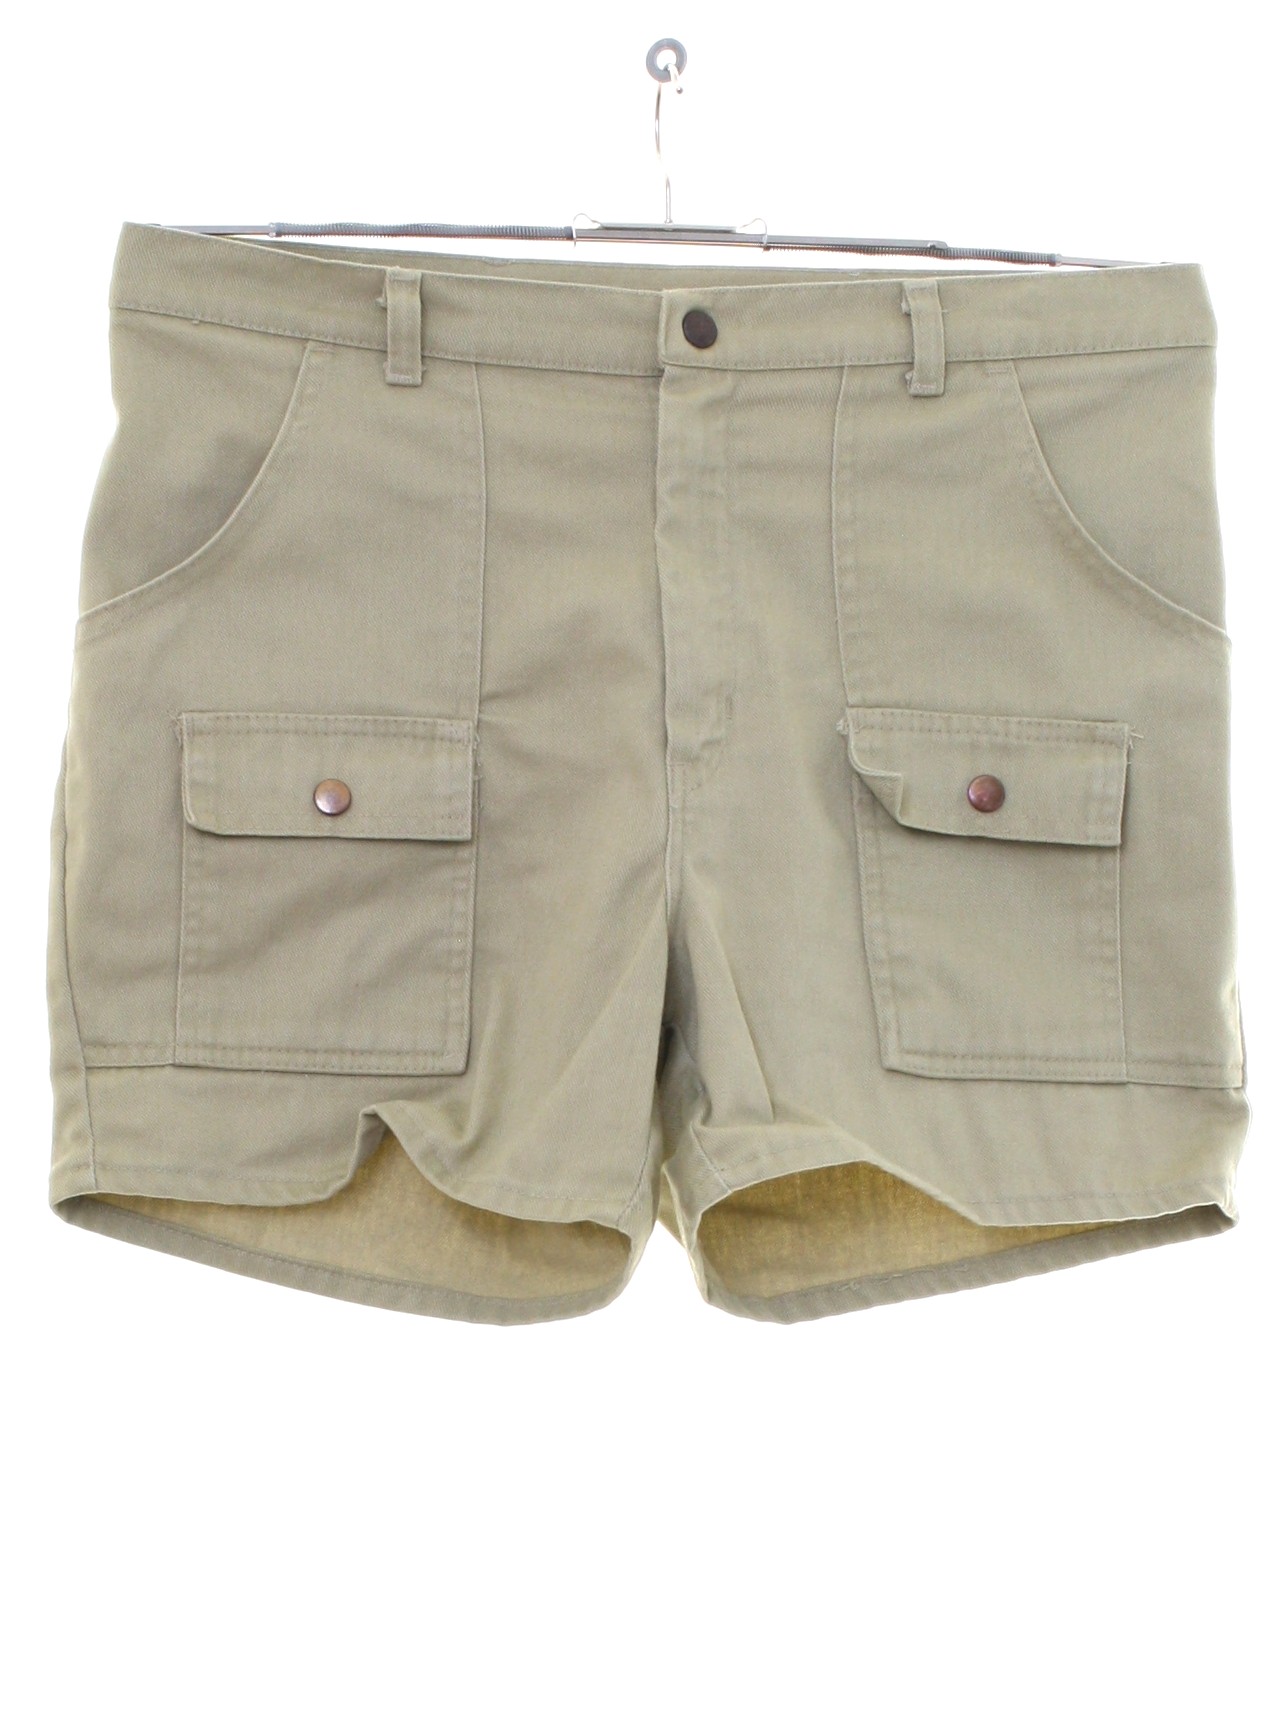 1980's Retro Shorts: Early 80s -Activewear, Made in USA- Mens khaki ...